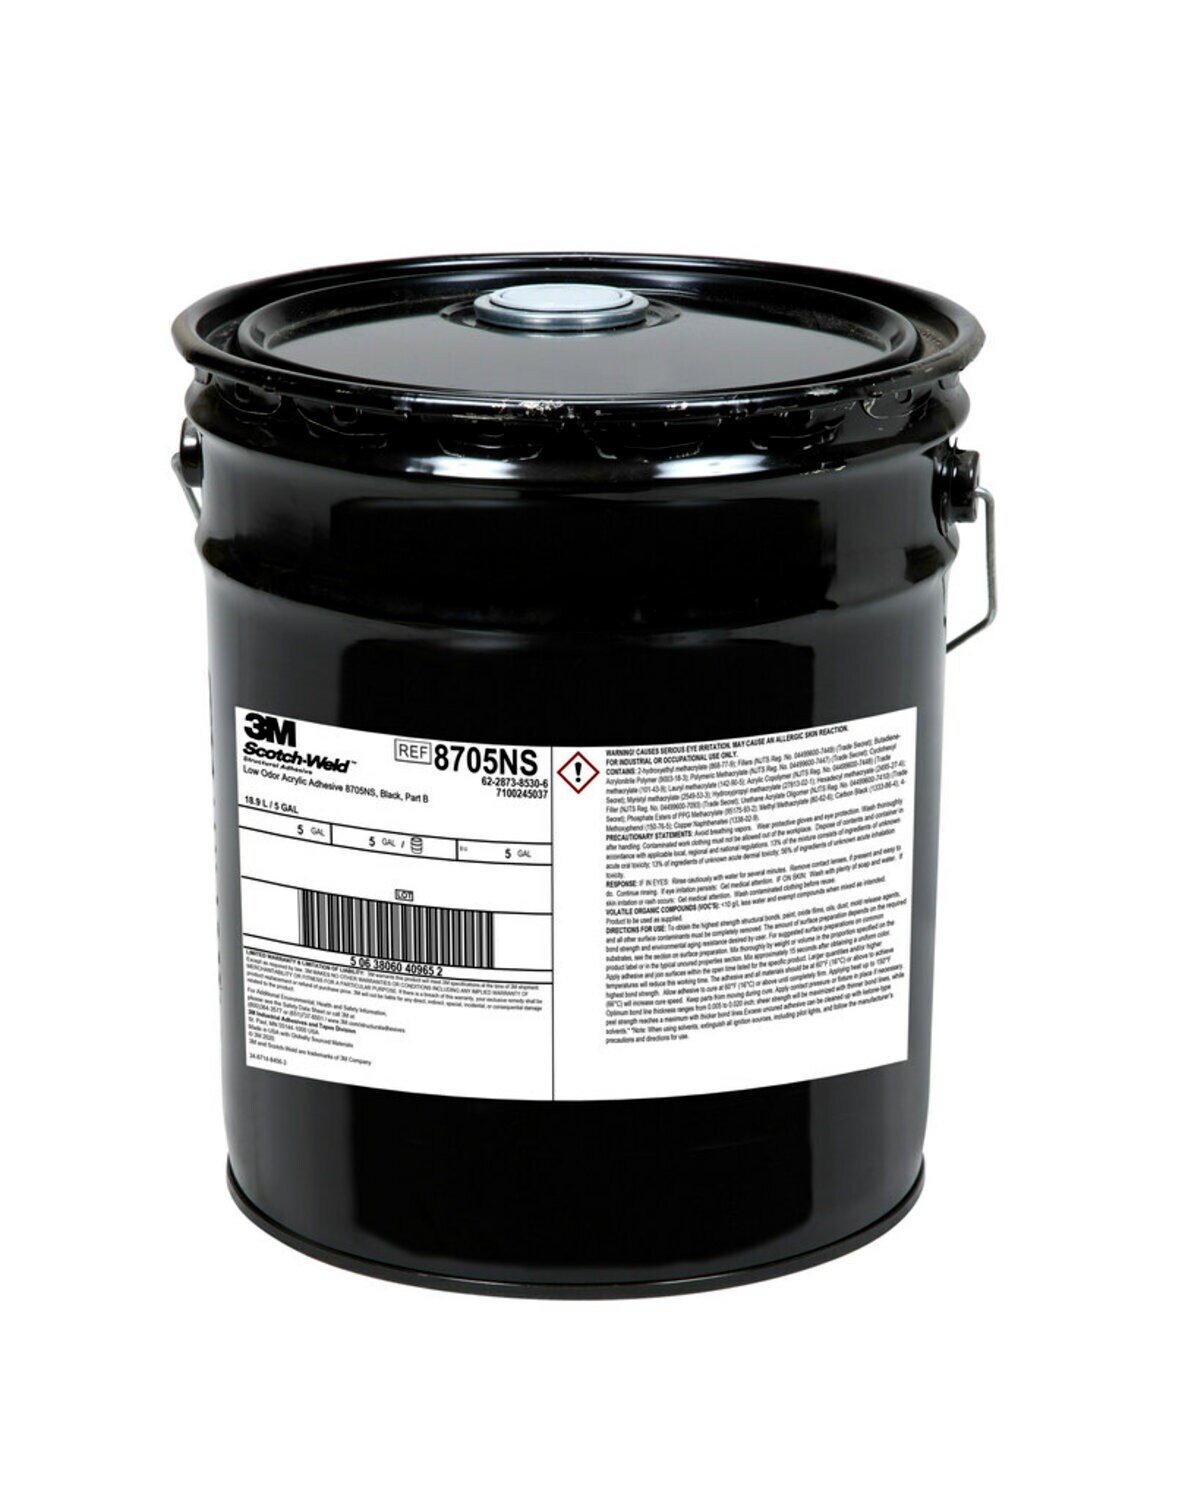 7100245037 - 3M Scotch-Weld Low Odor Acrylic Adhesive 8705NS, Black, Part B, 5
Gallon (Pail), Drum